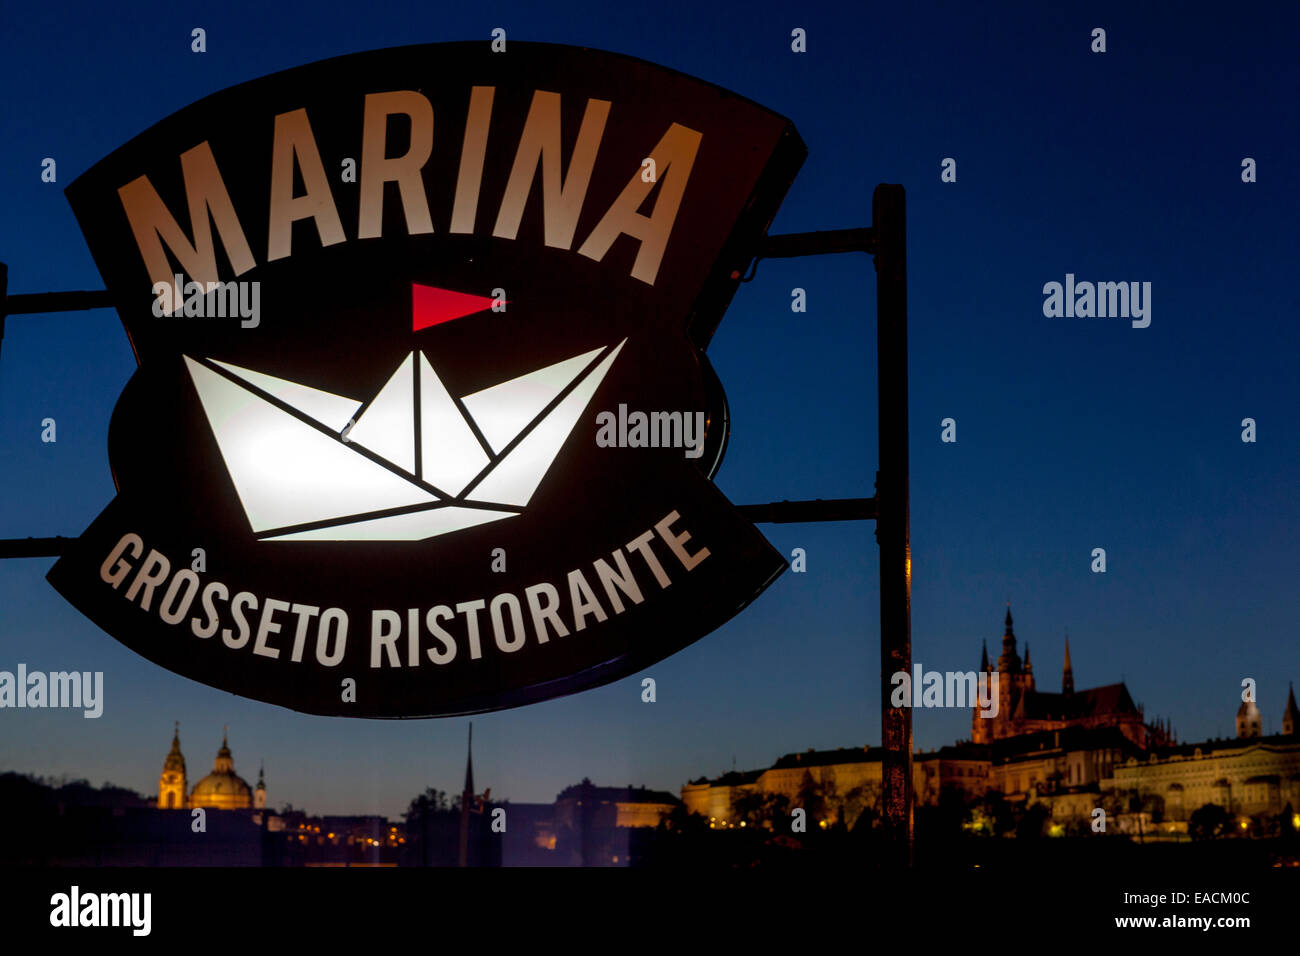 Grosseto Marina Restaurant Prague Czech Republic, Europe sign Stock Photo